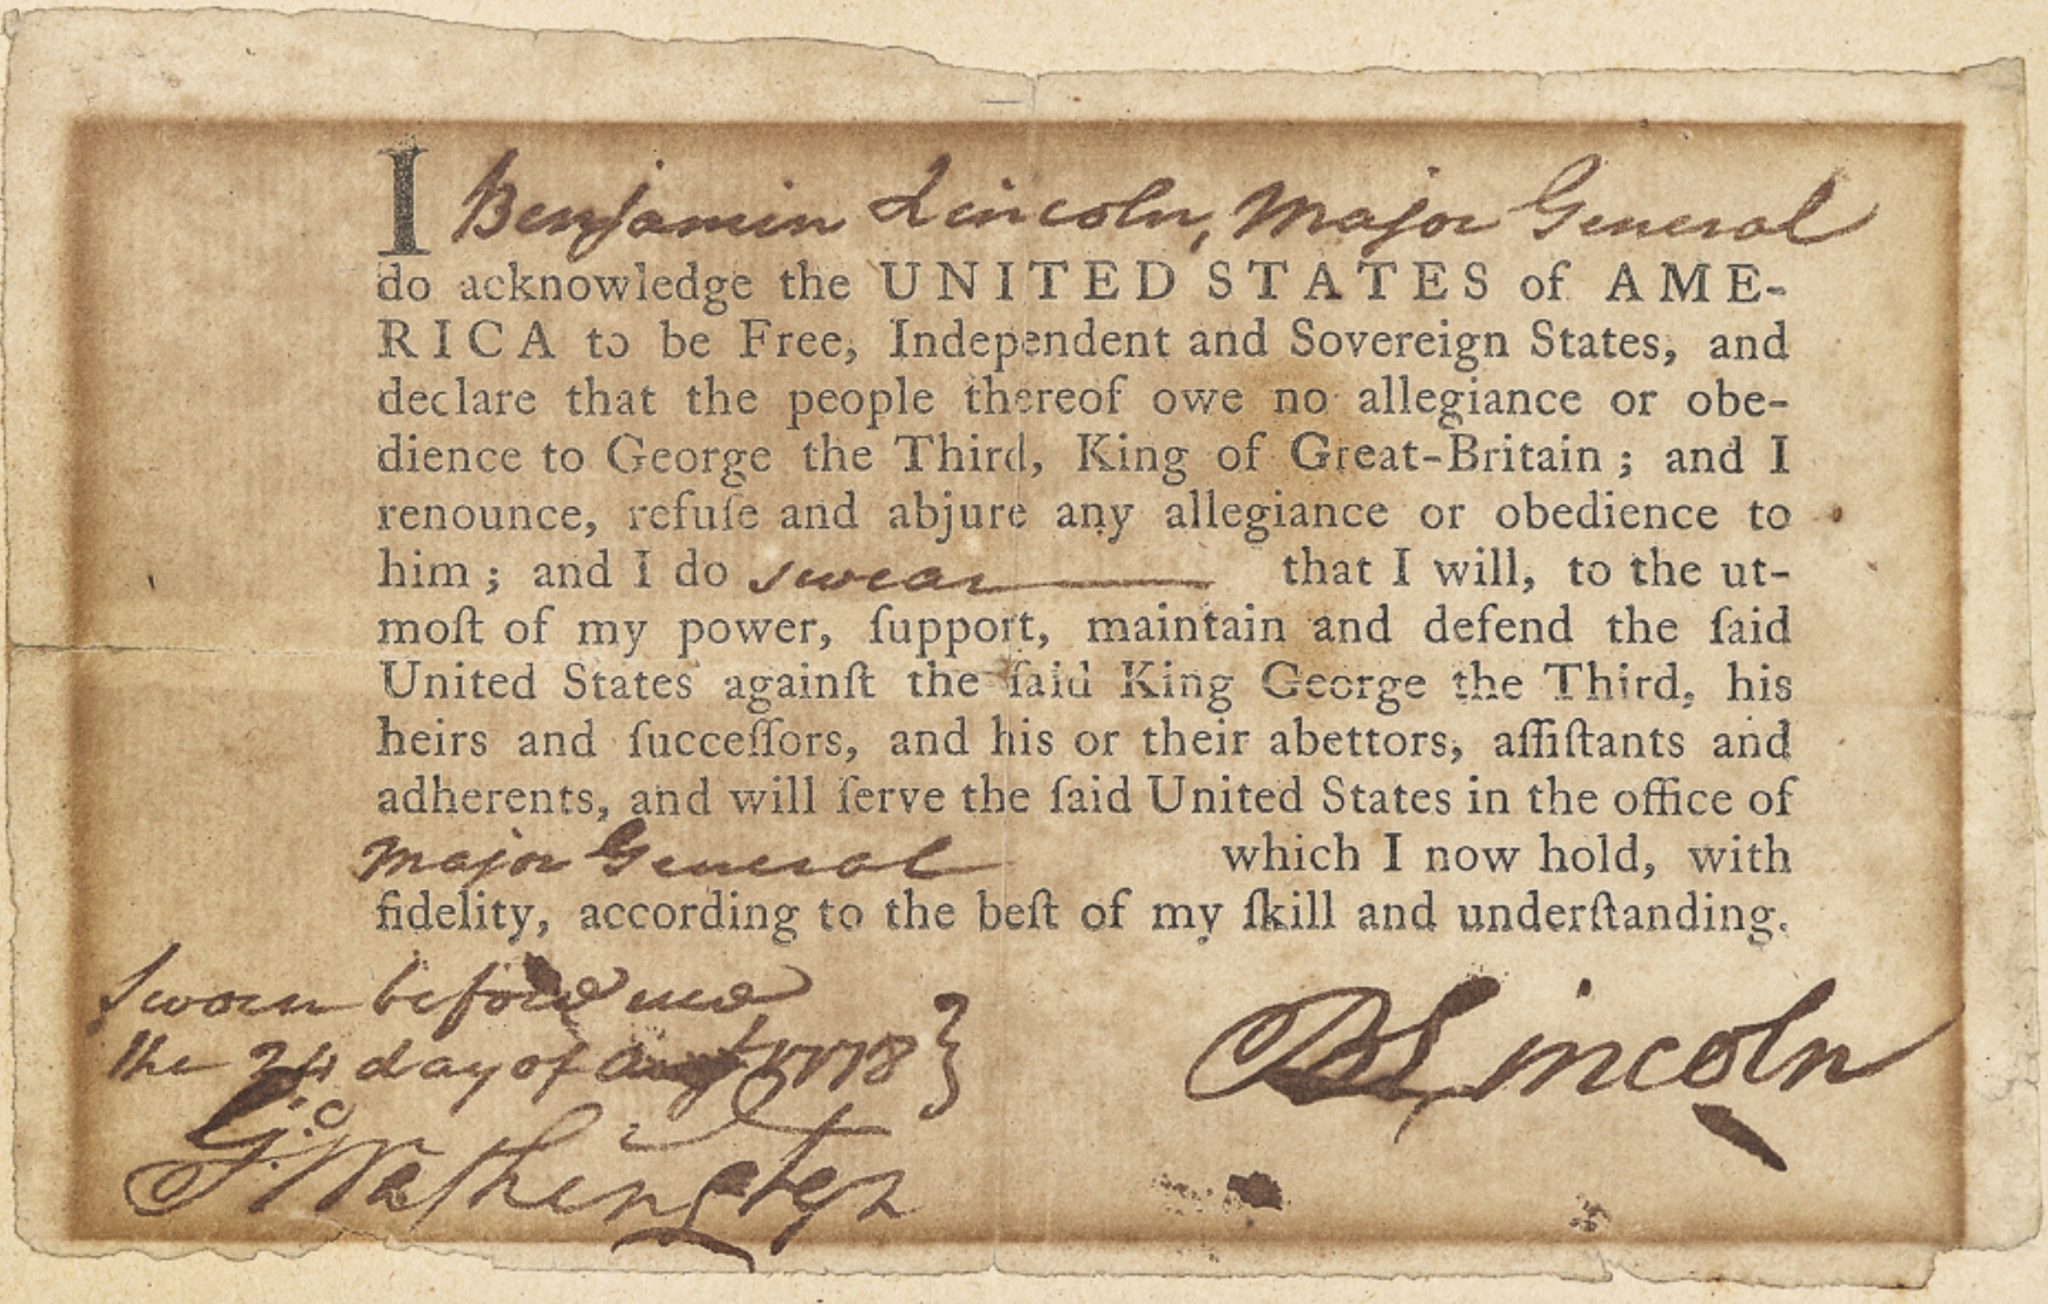 Benjamin Lincoln's Fireside - The American Revolution Institute